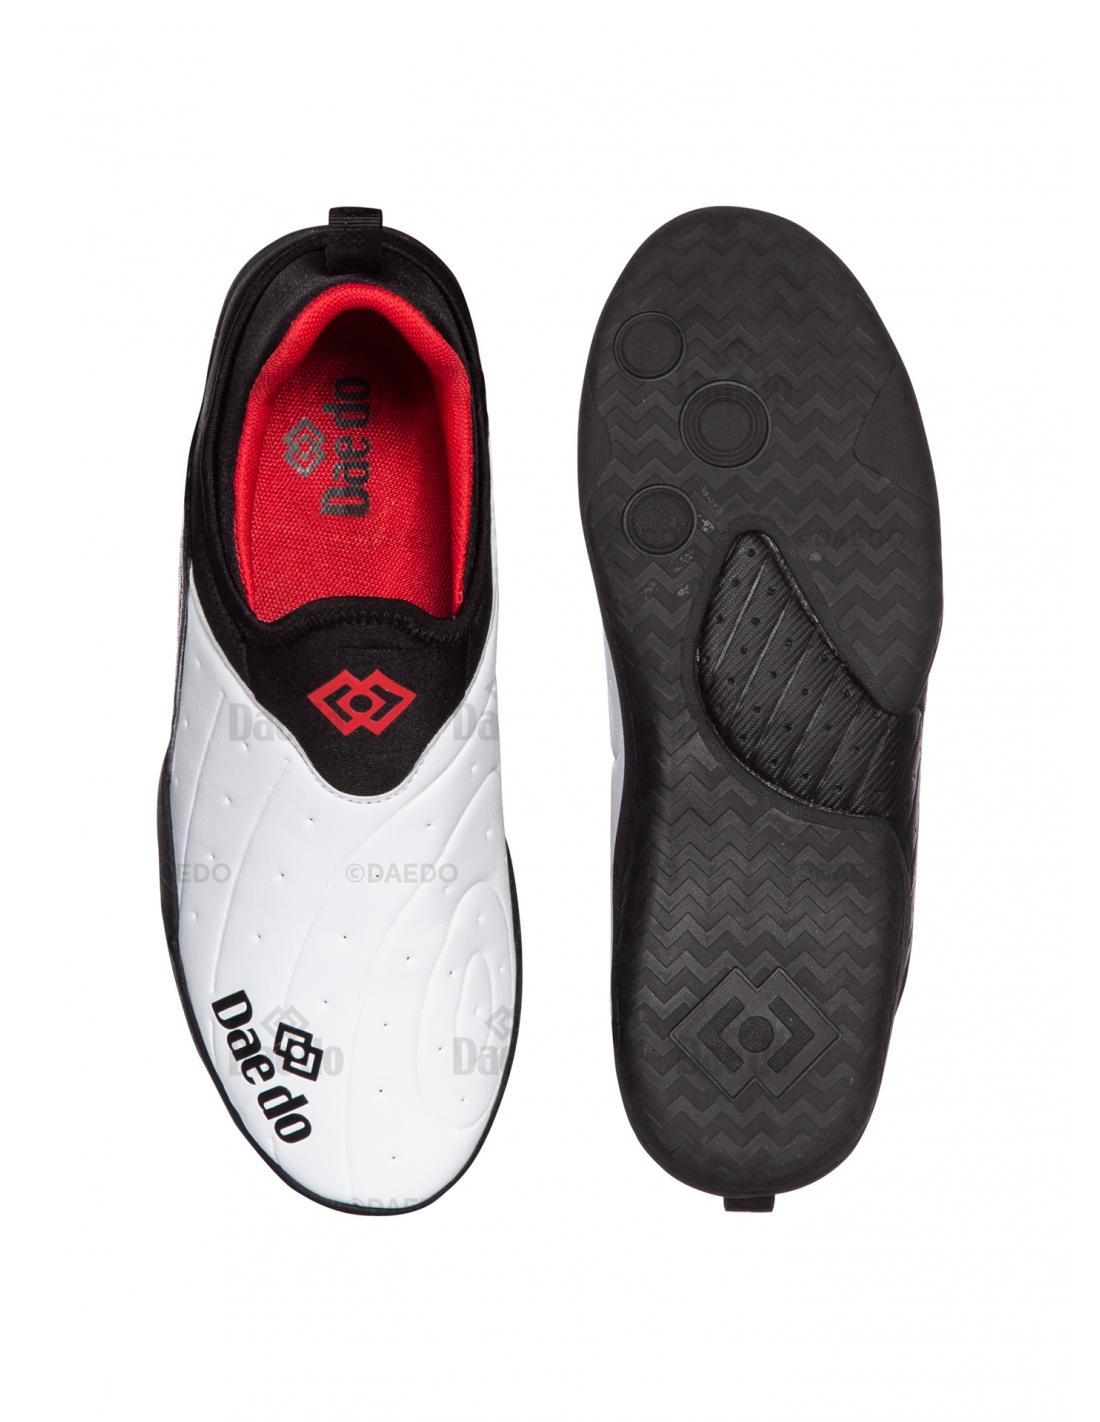 Daedo Budo Chaussures ACTION - blanc/noir, ZA3150